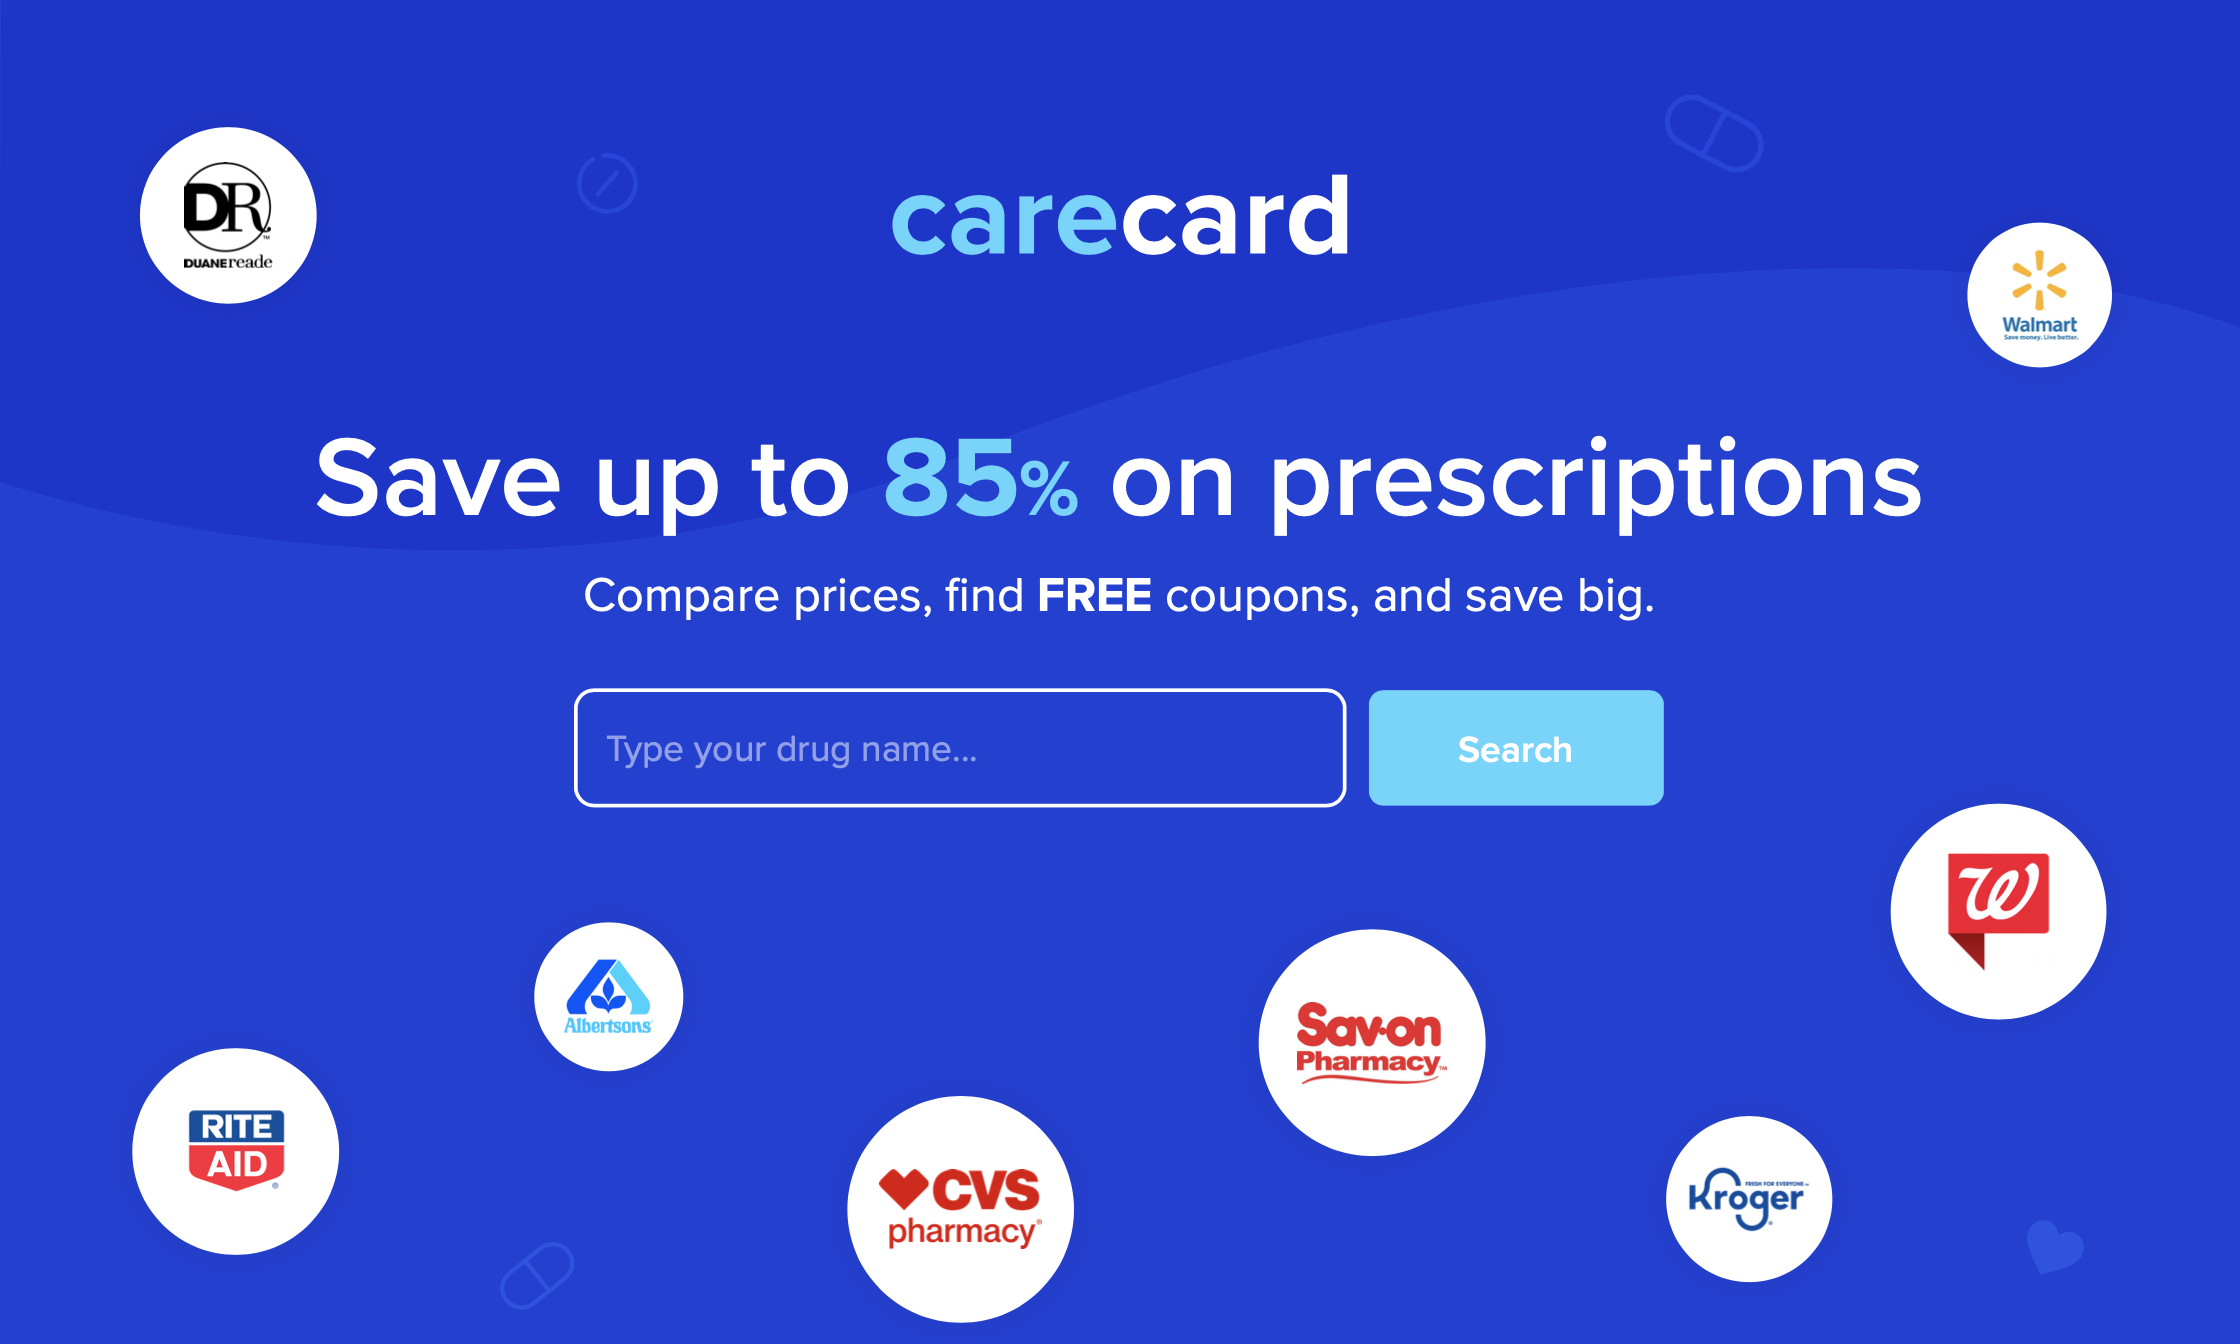 CareCard Pharmacy Discount Card Offers Big Savings On US Prescription Drugs